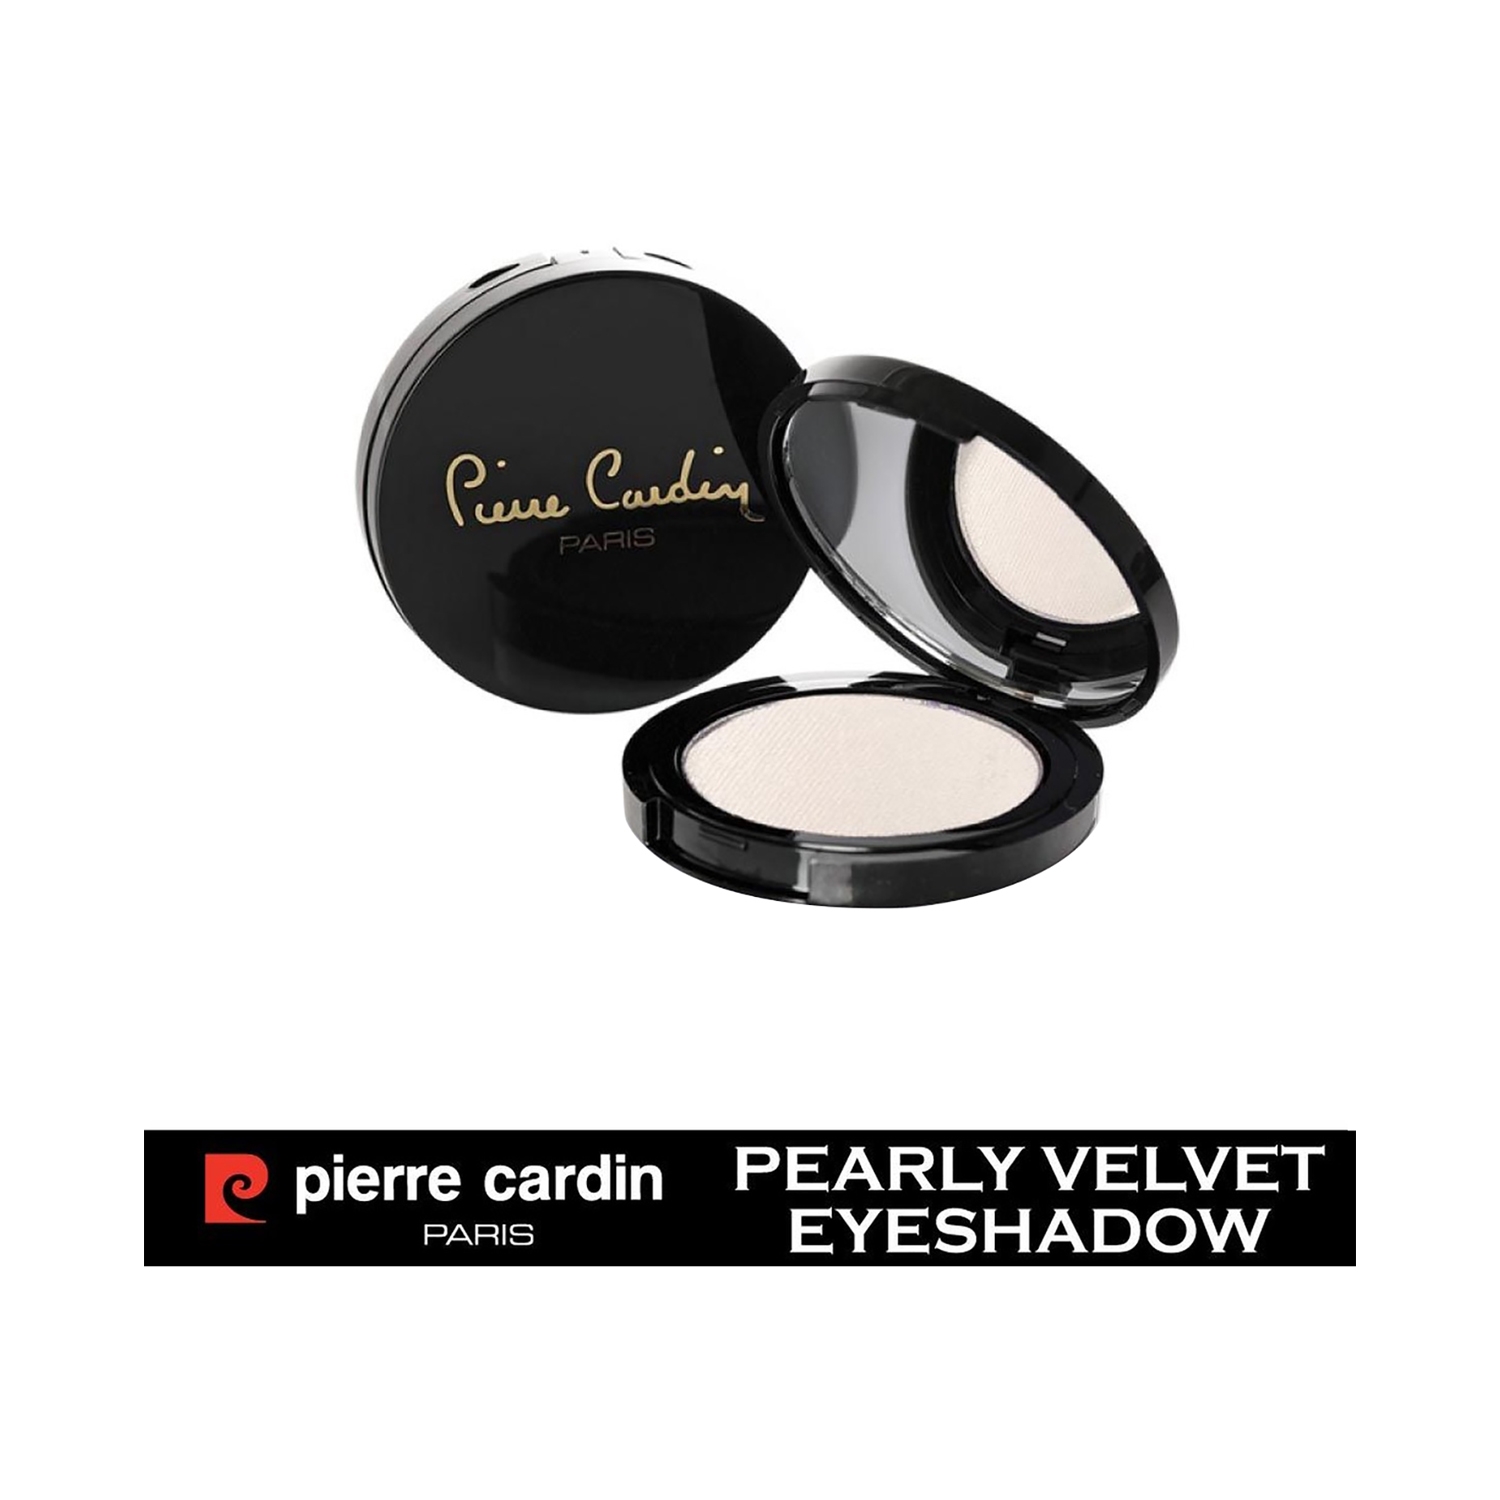 Pierre Cardin Paris | Pierre Cardin Paris Pearly Velvet Eye Shadow - 970 Marshmallow (4g)